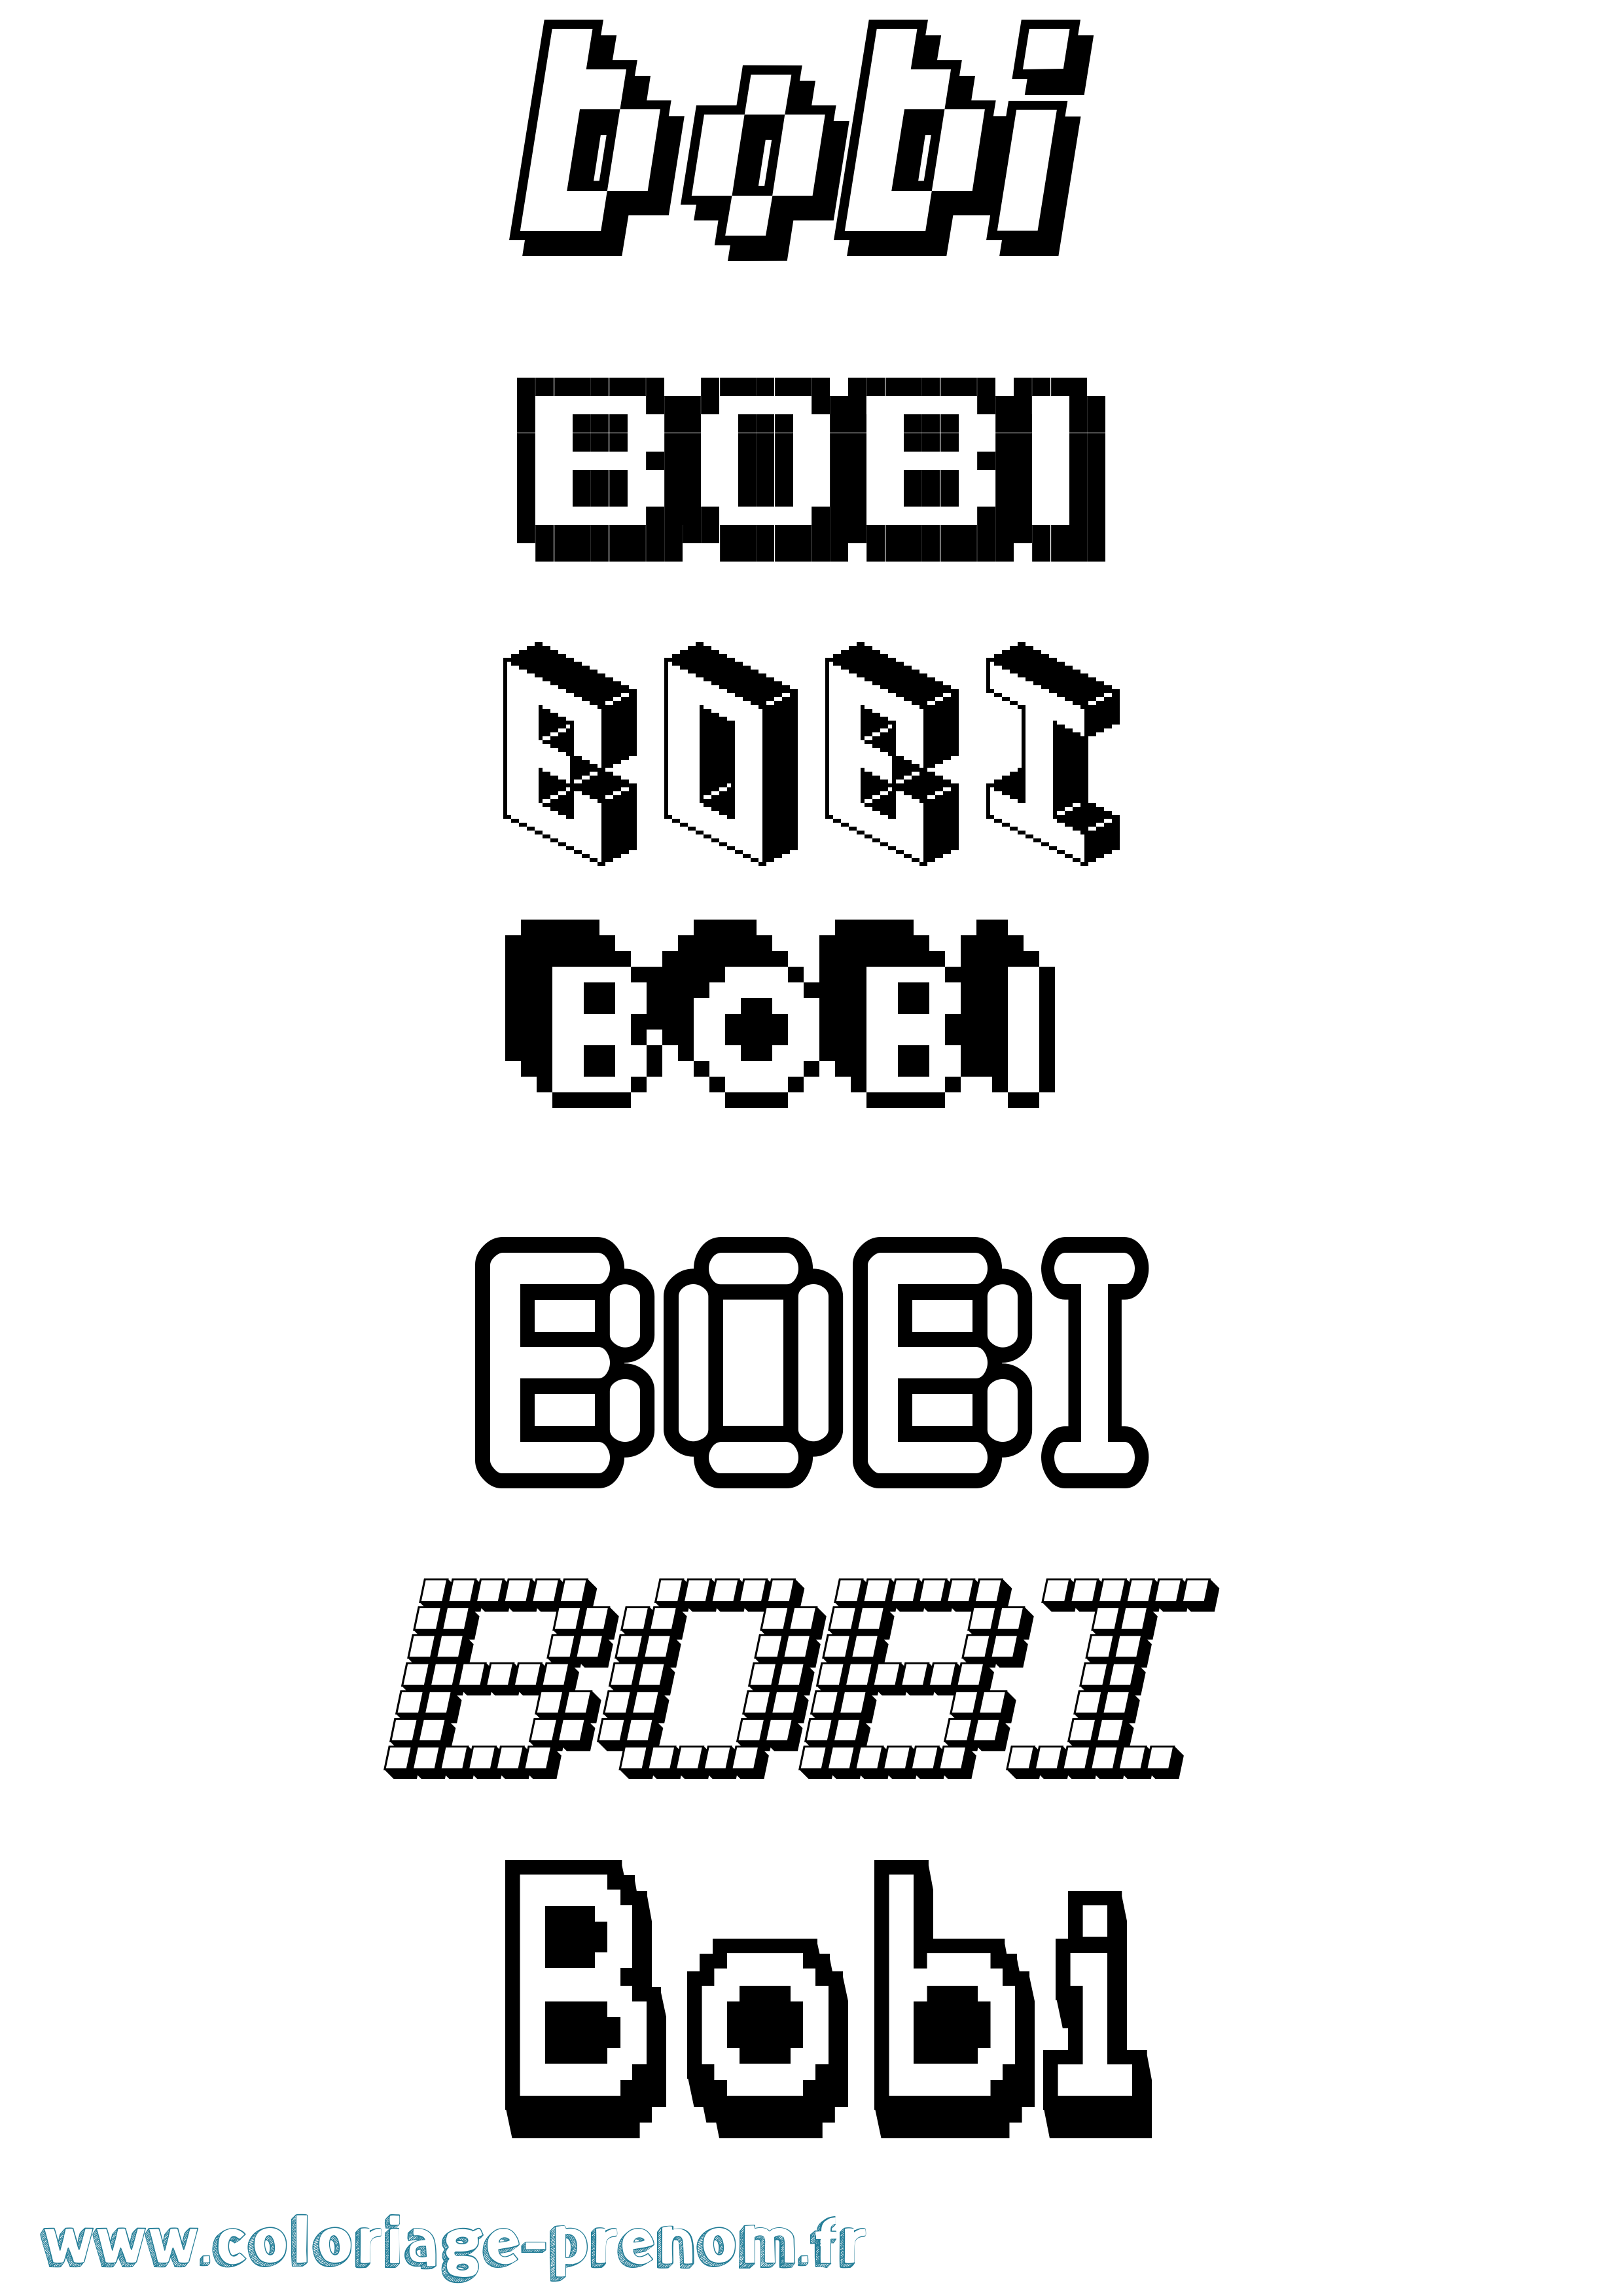 Coloriage prénom Bobi Pixel